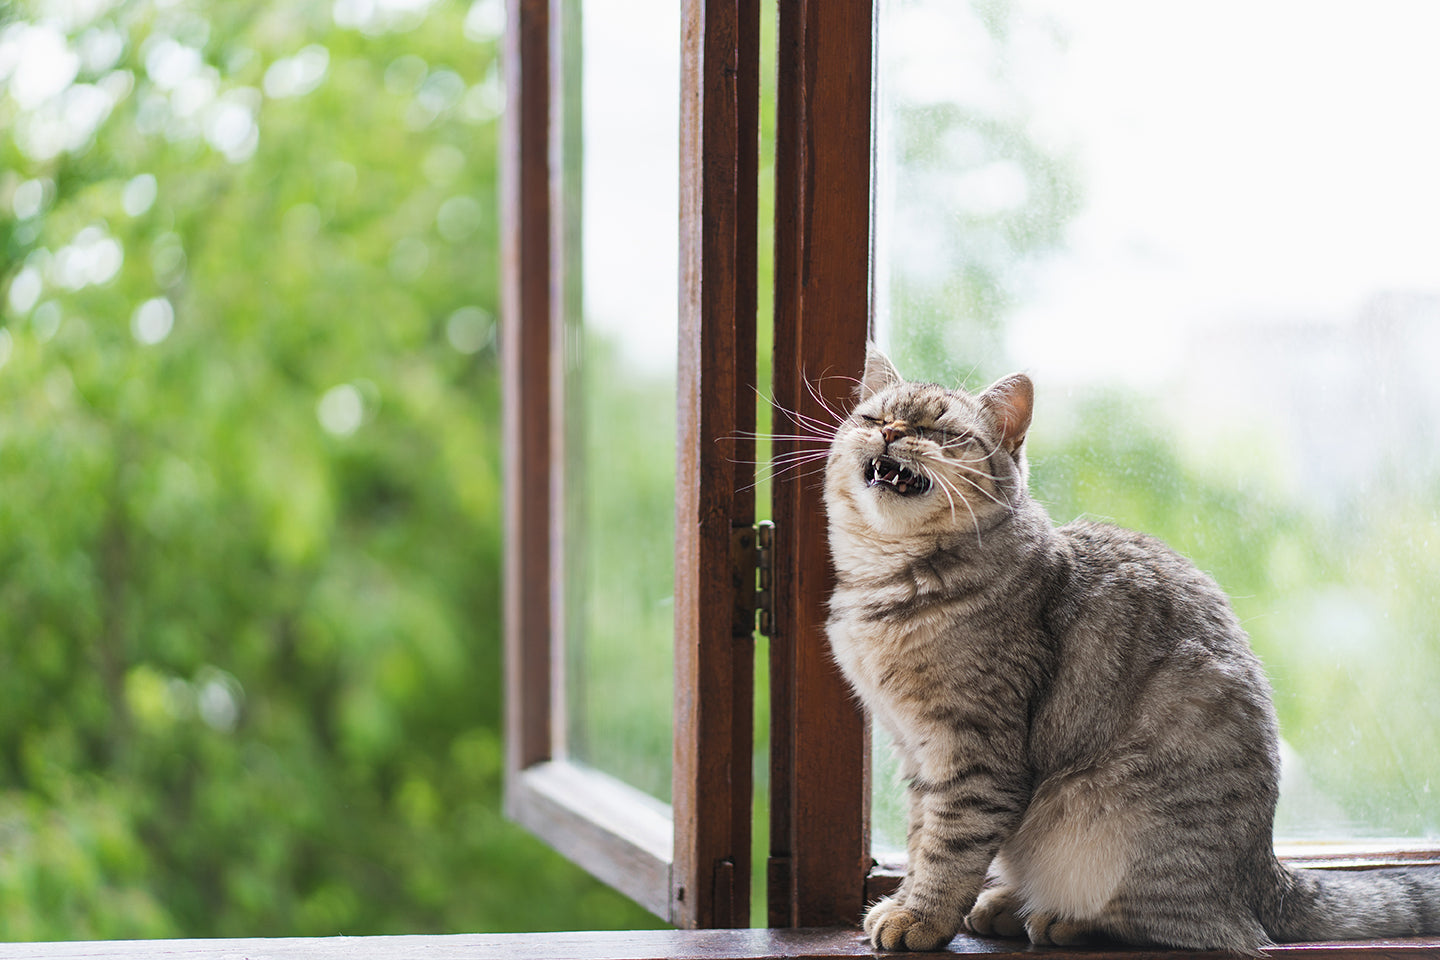 Cat is sneezing with open window behind it.